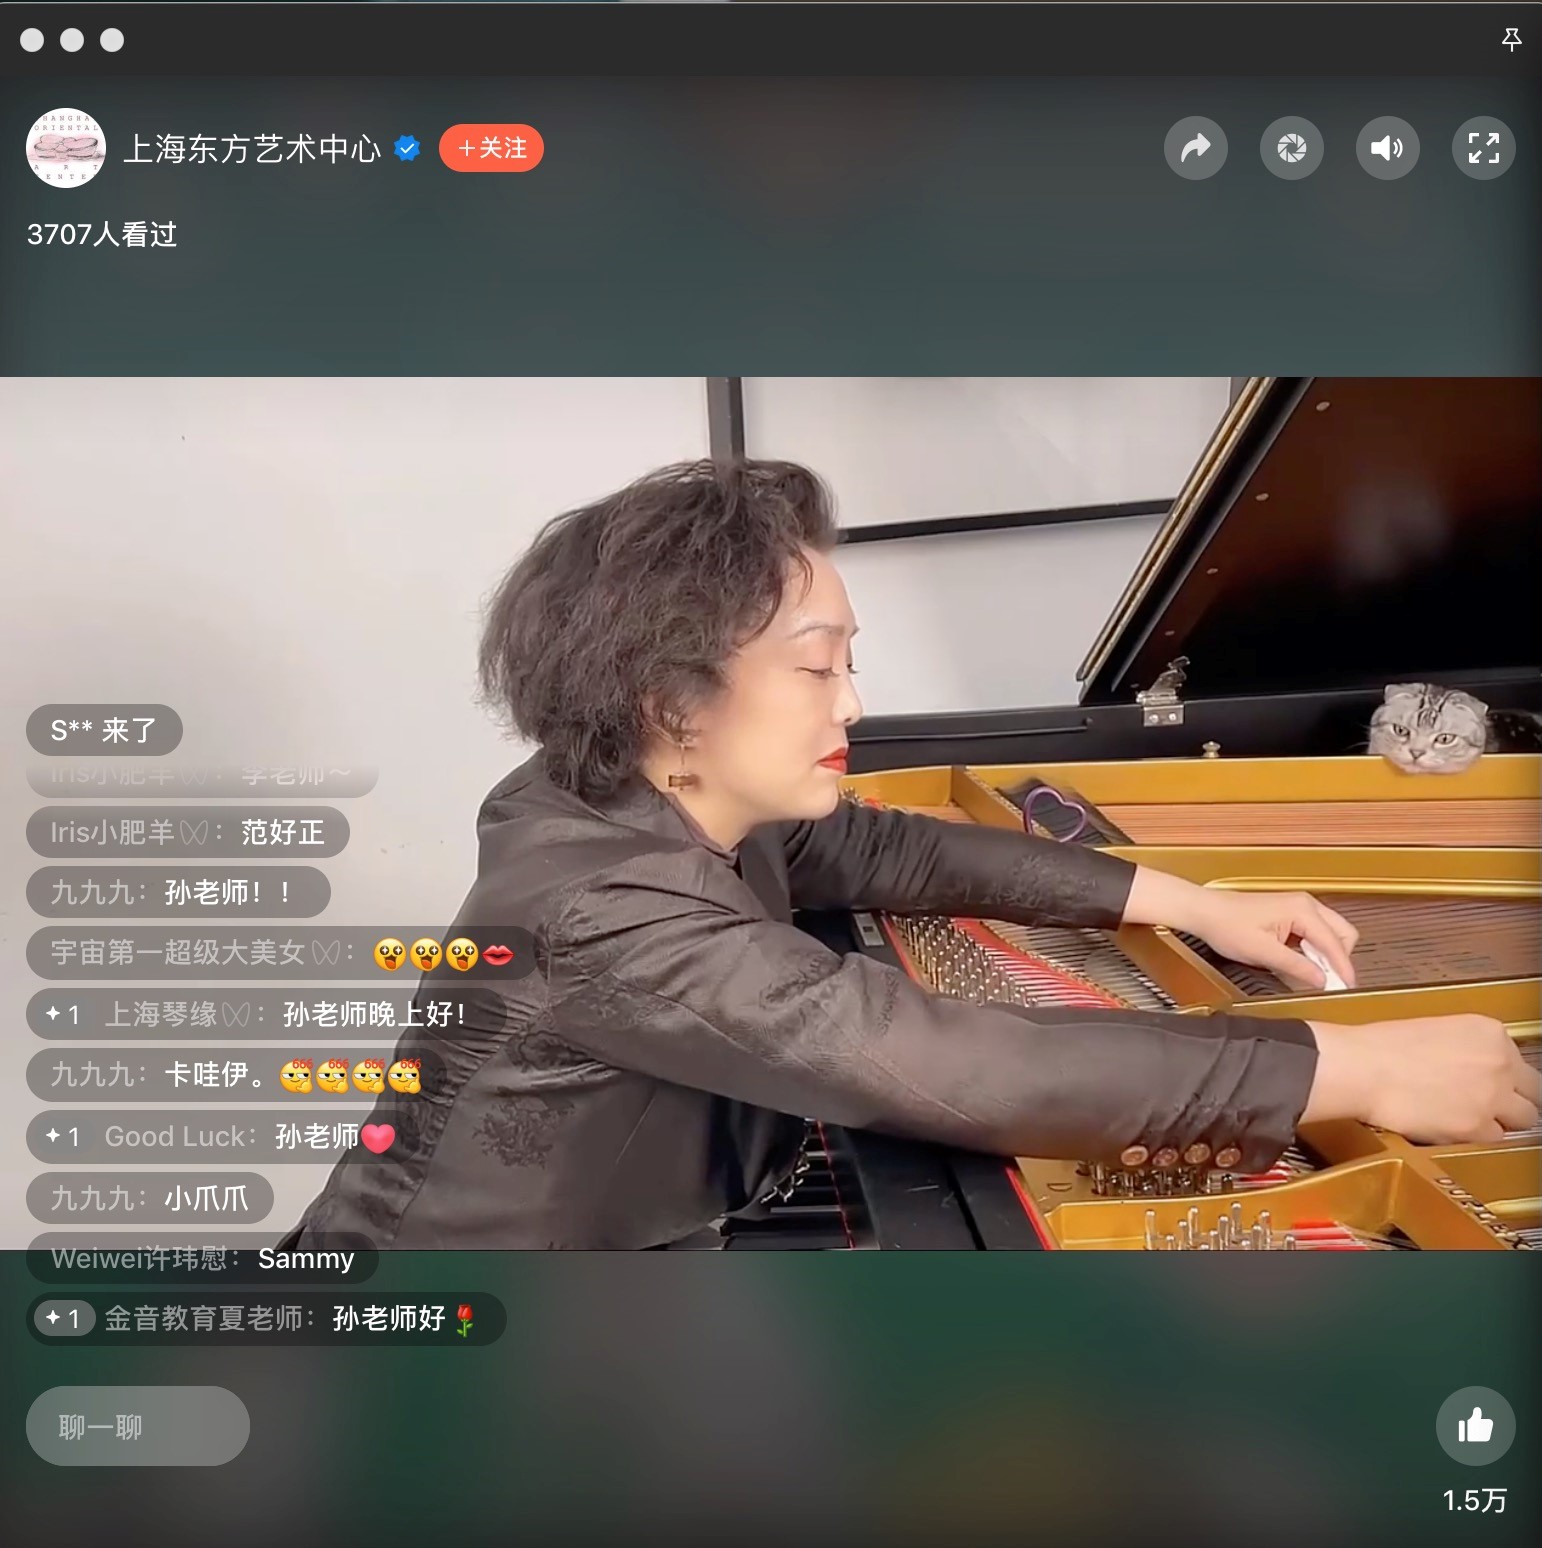 Sammy accompanies Sun Yun to practice the piano